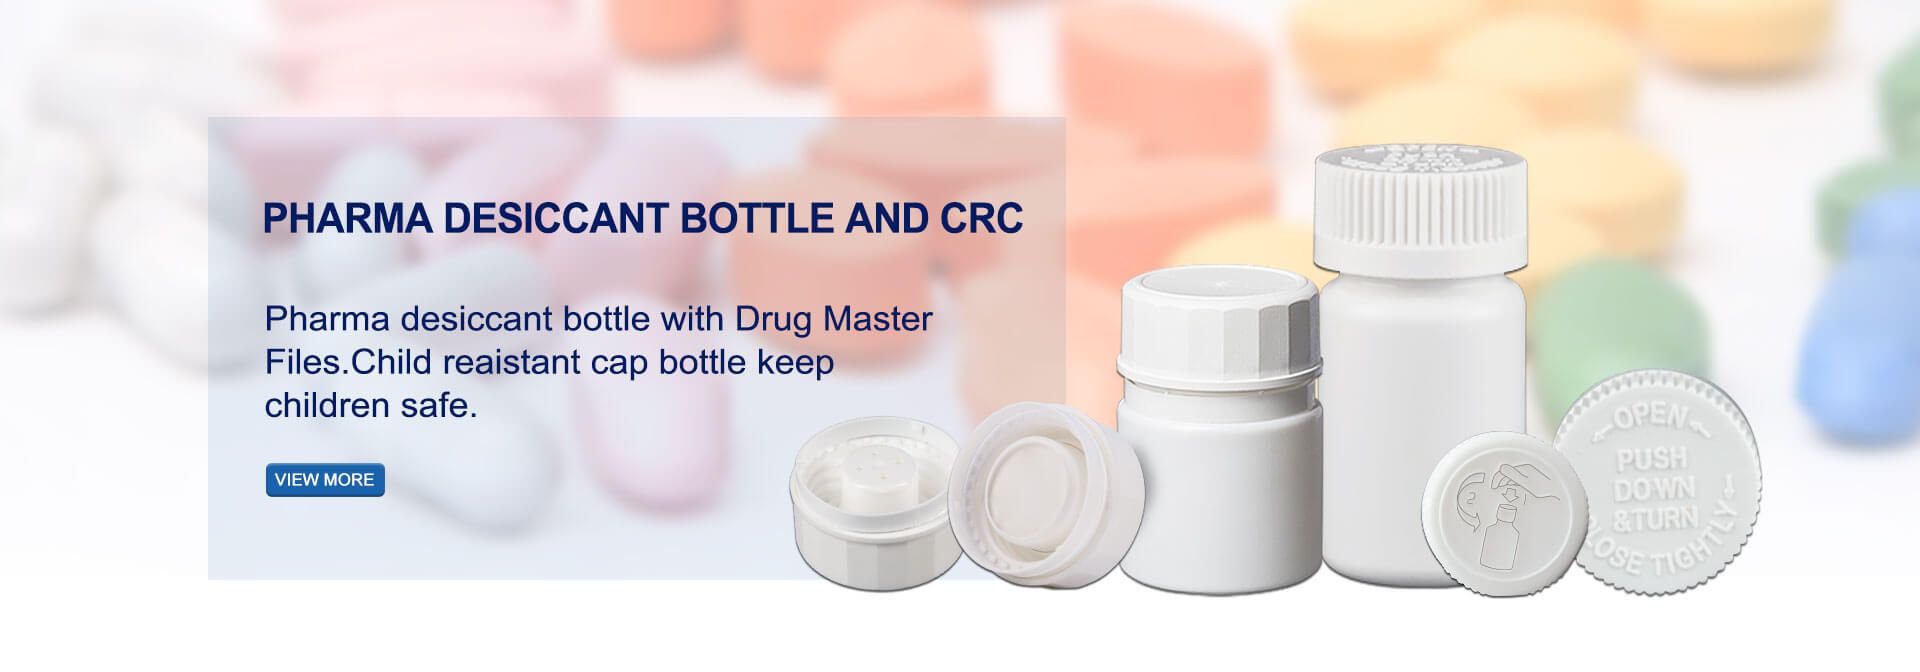 Pharma Desiccant Bottle and CRC